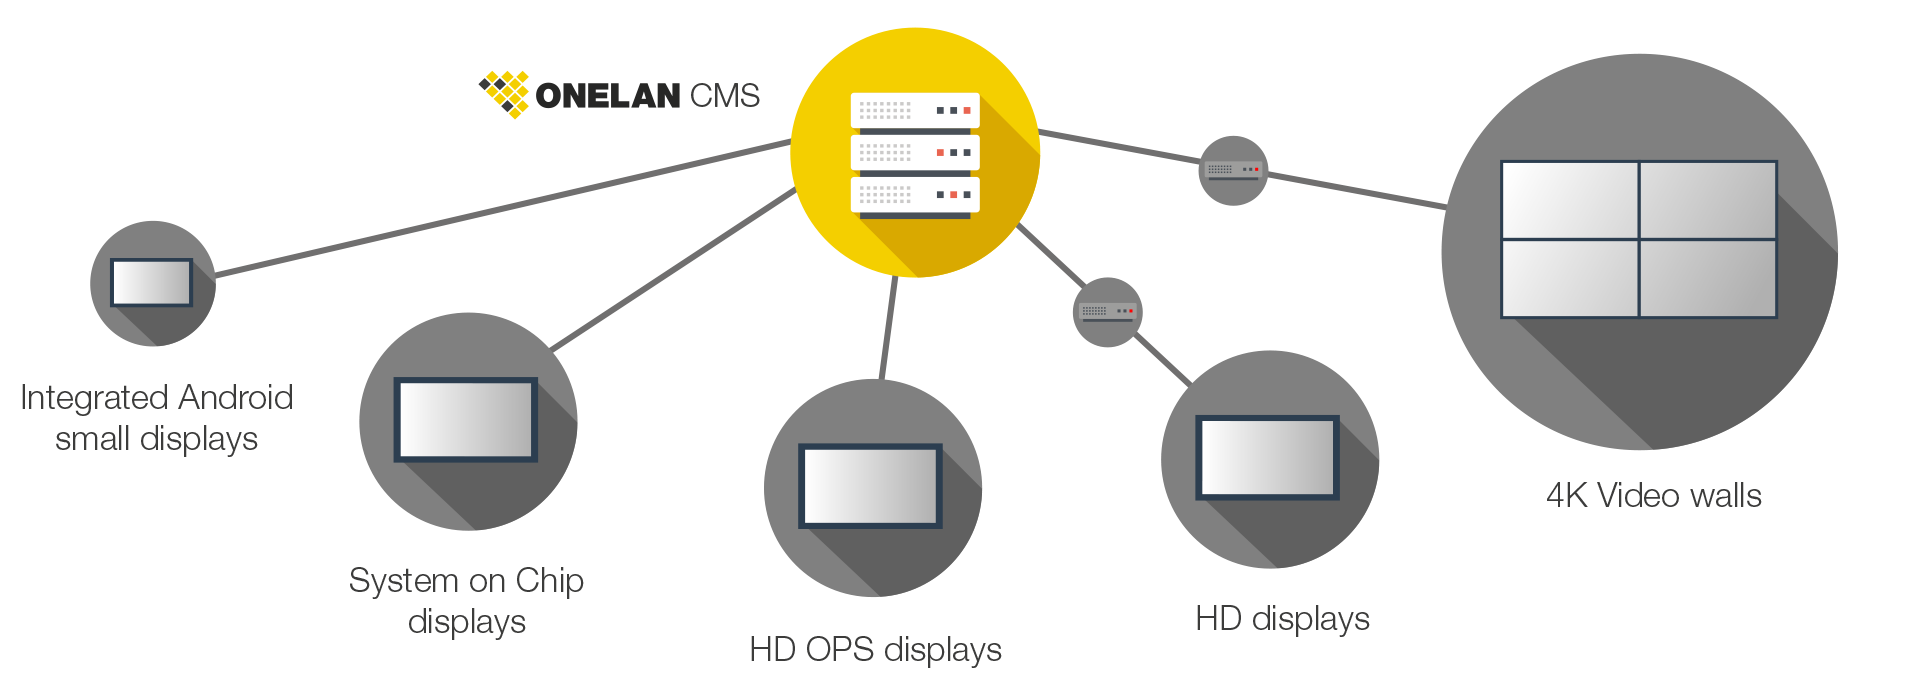 ONELAN CMS - Network Diagram